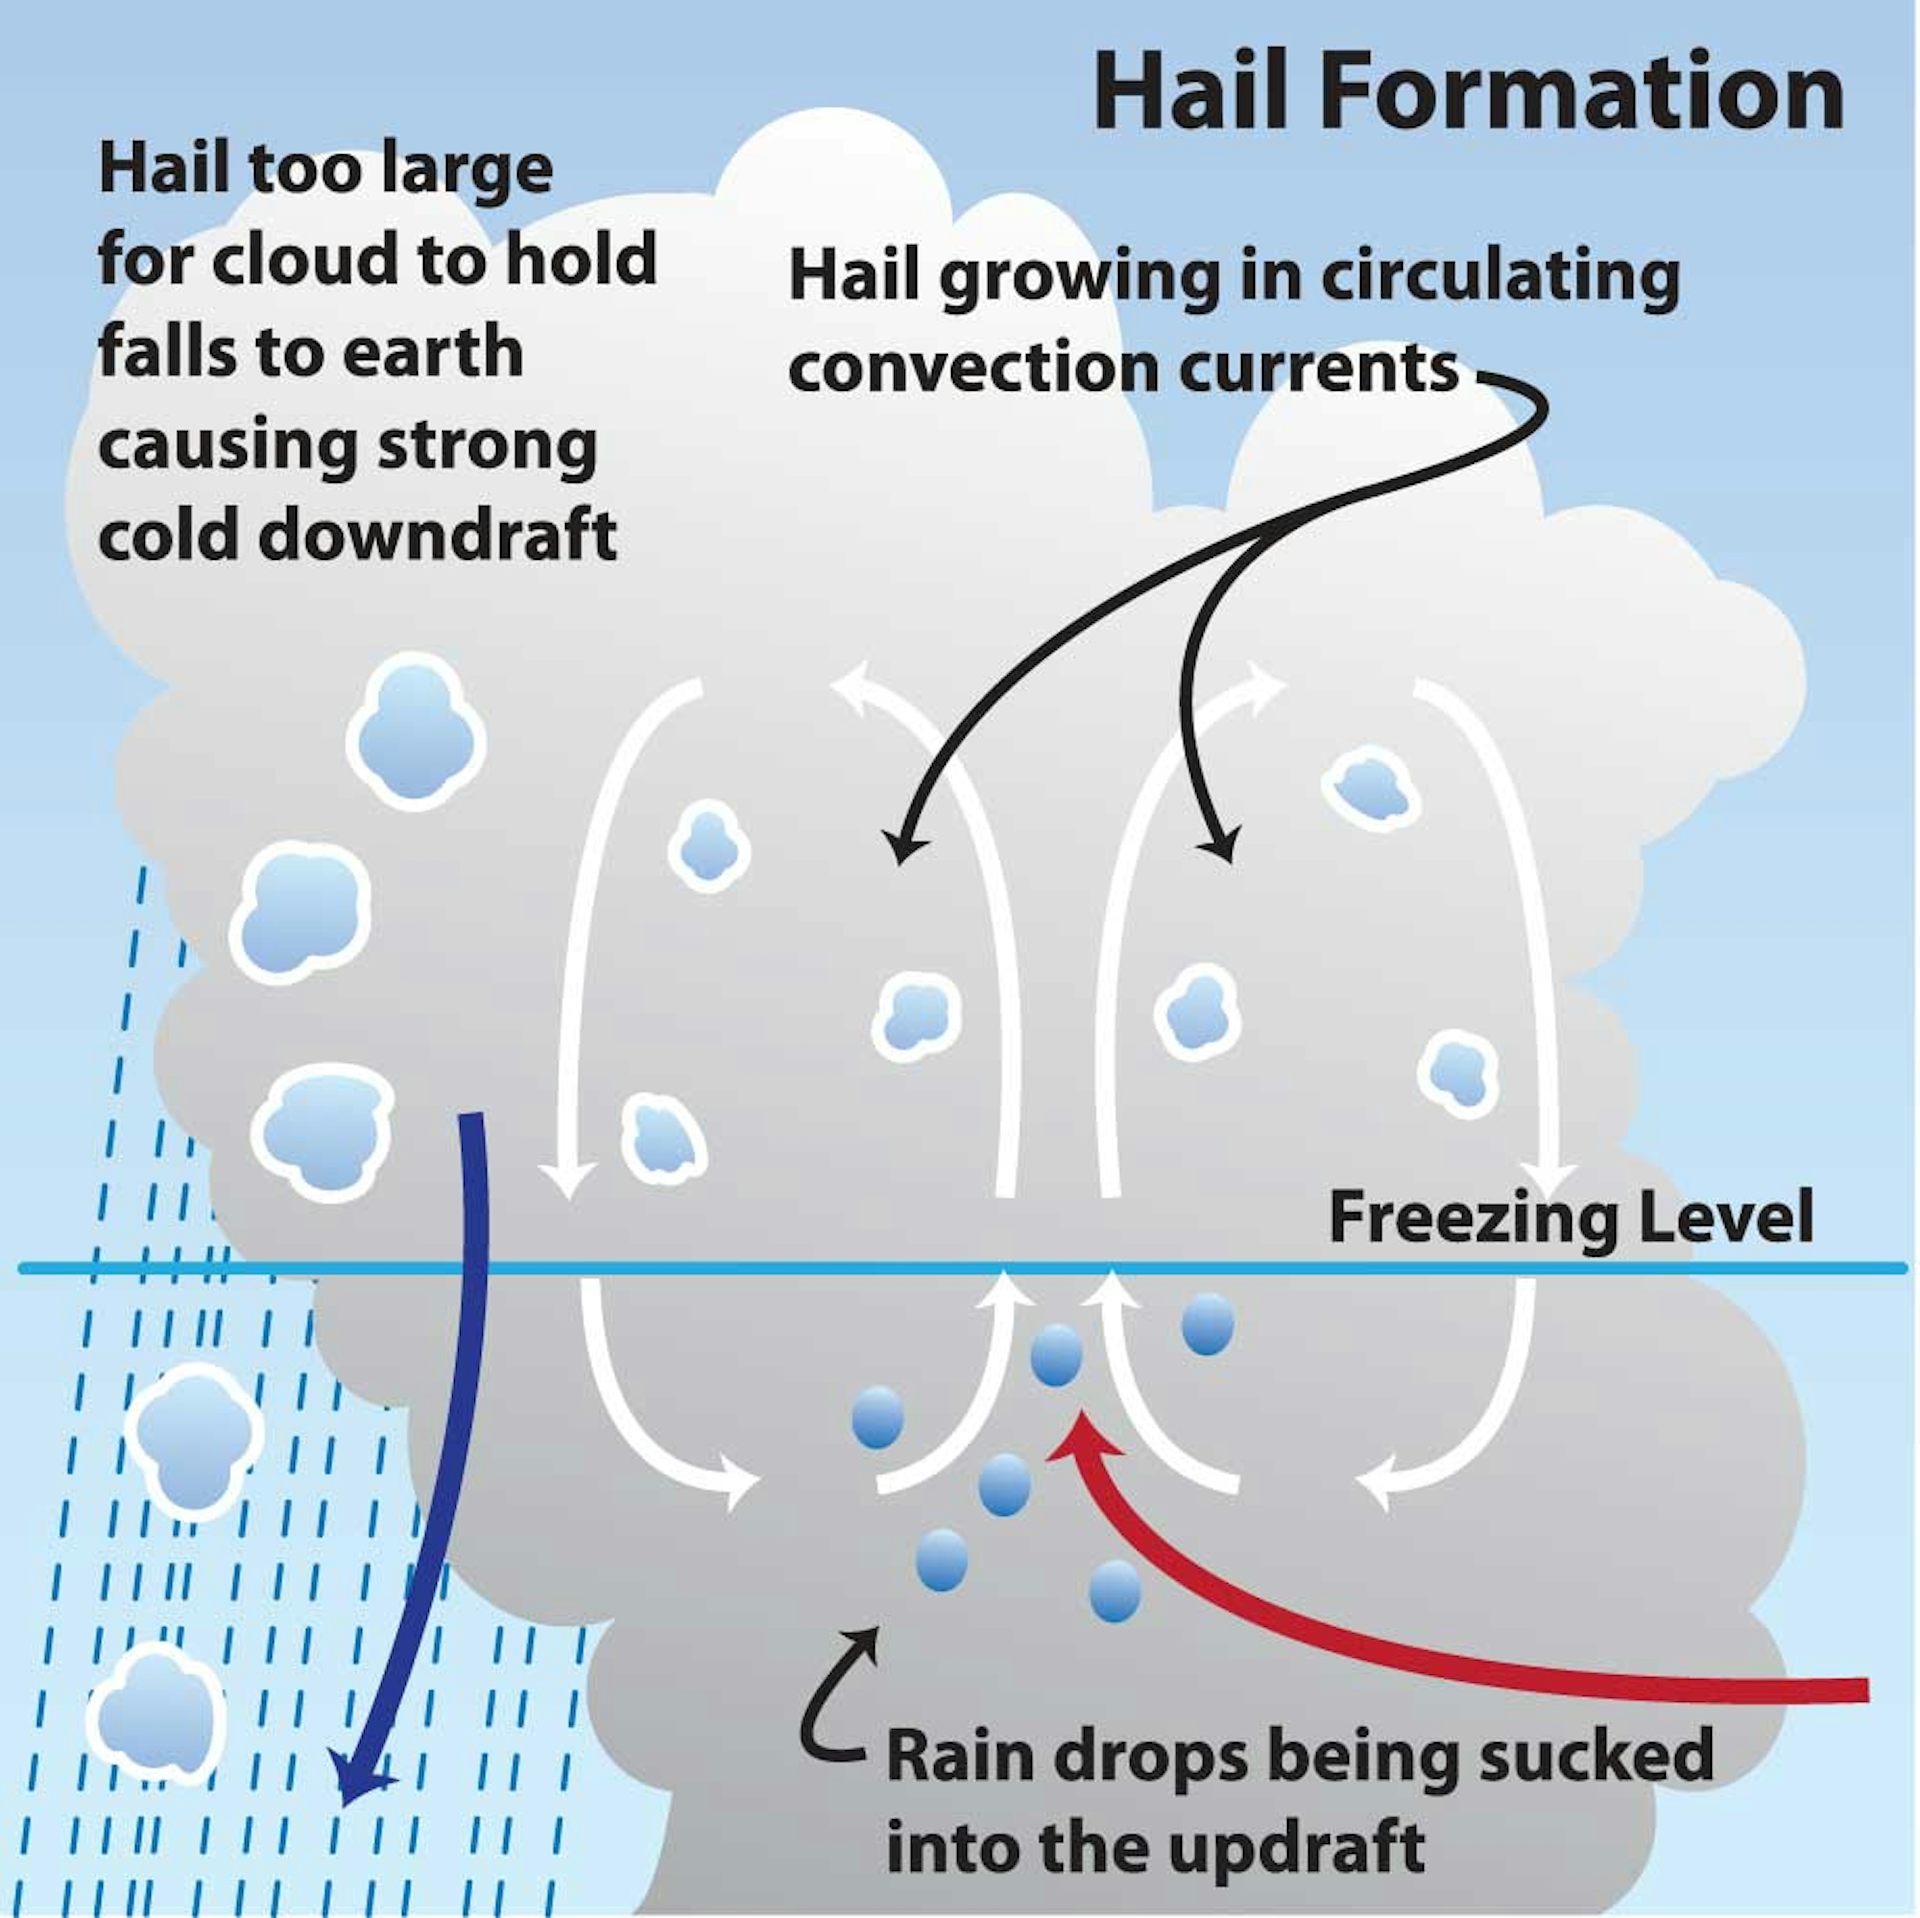 Hail Size Chart